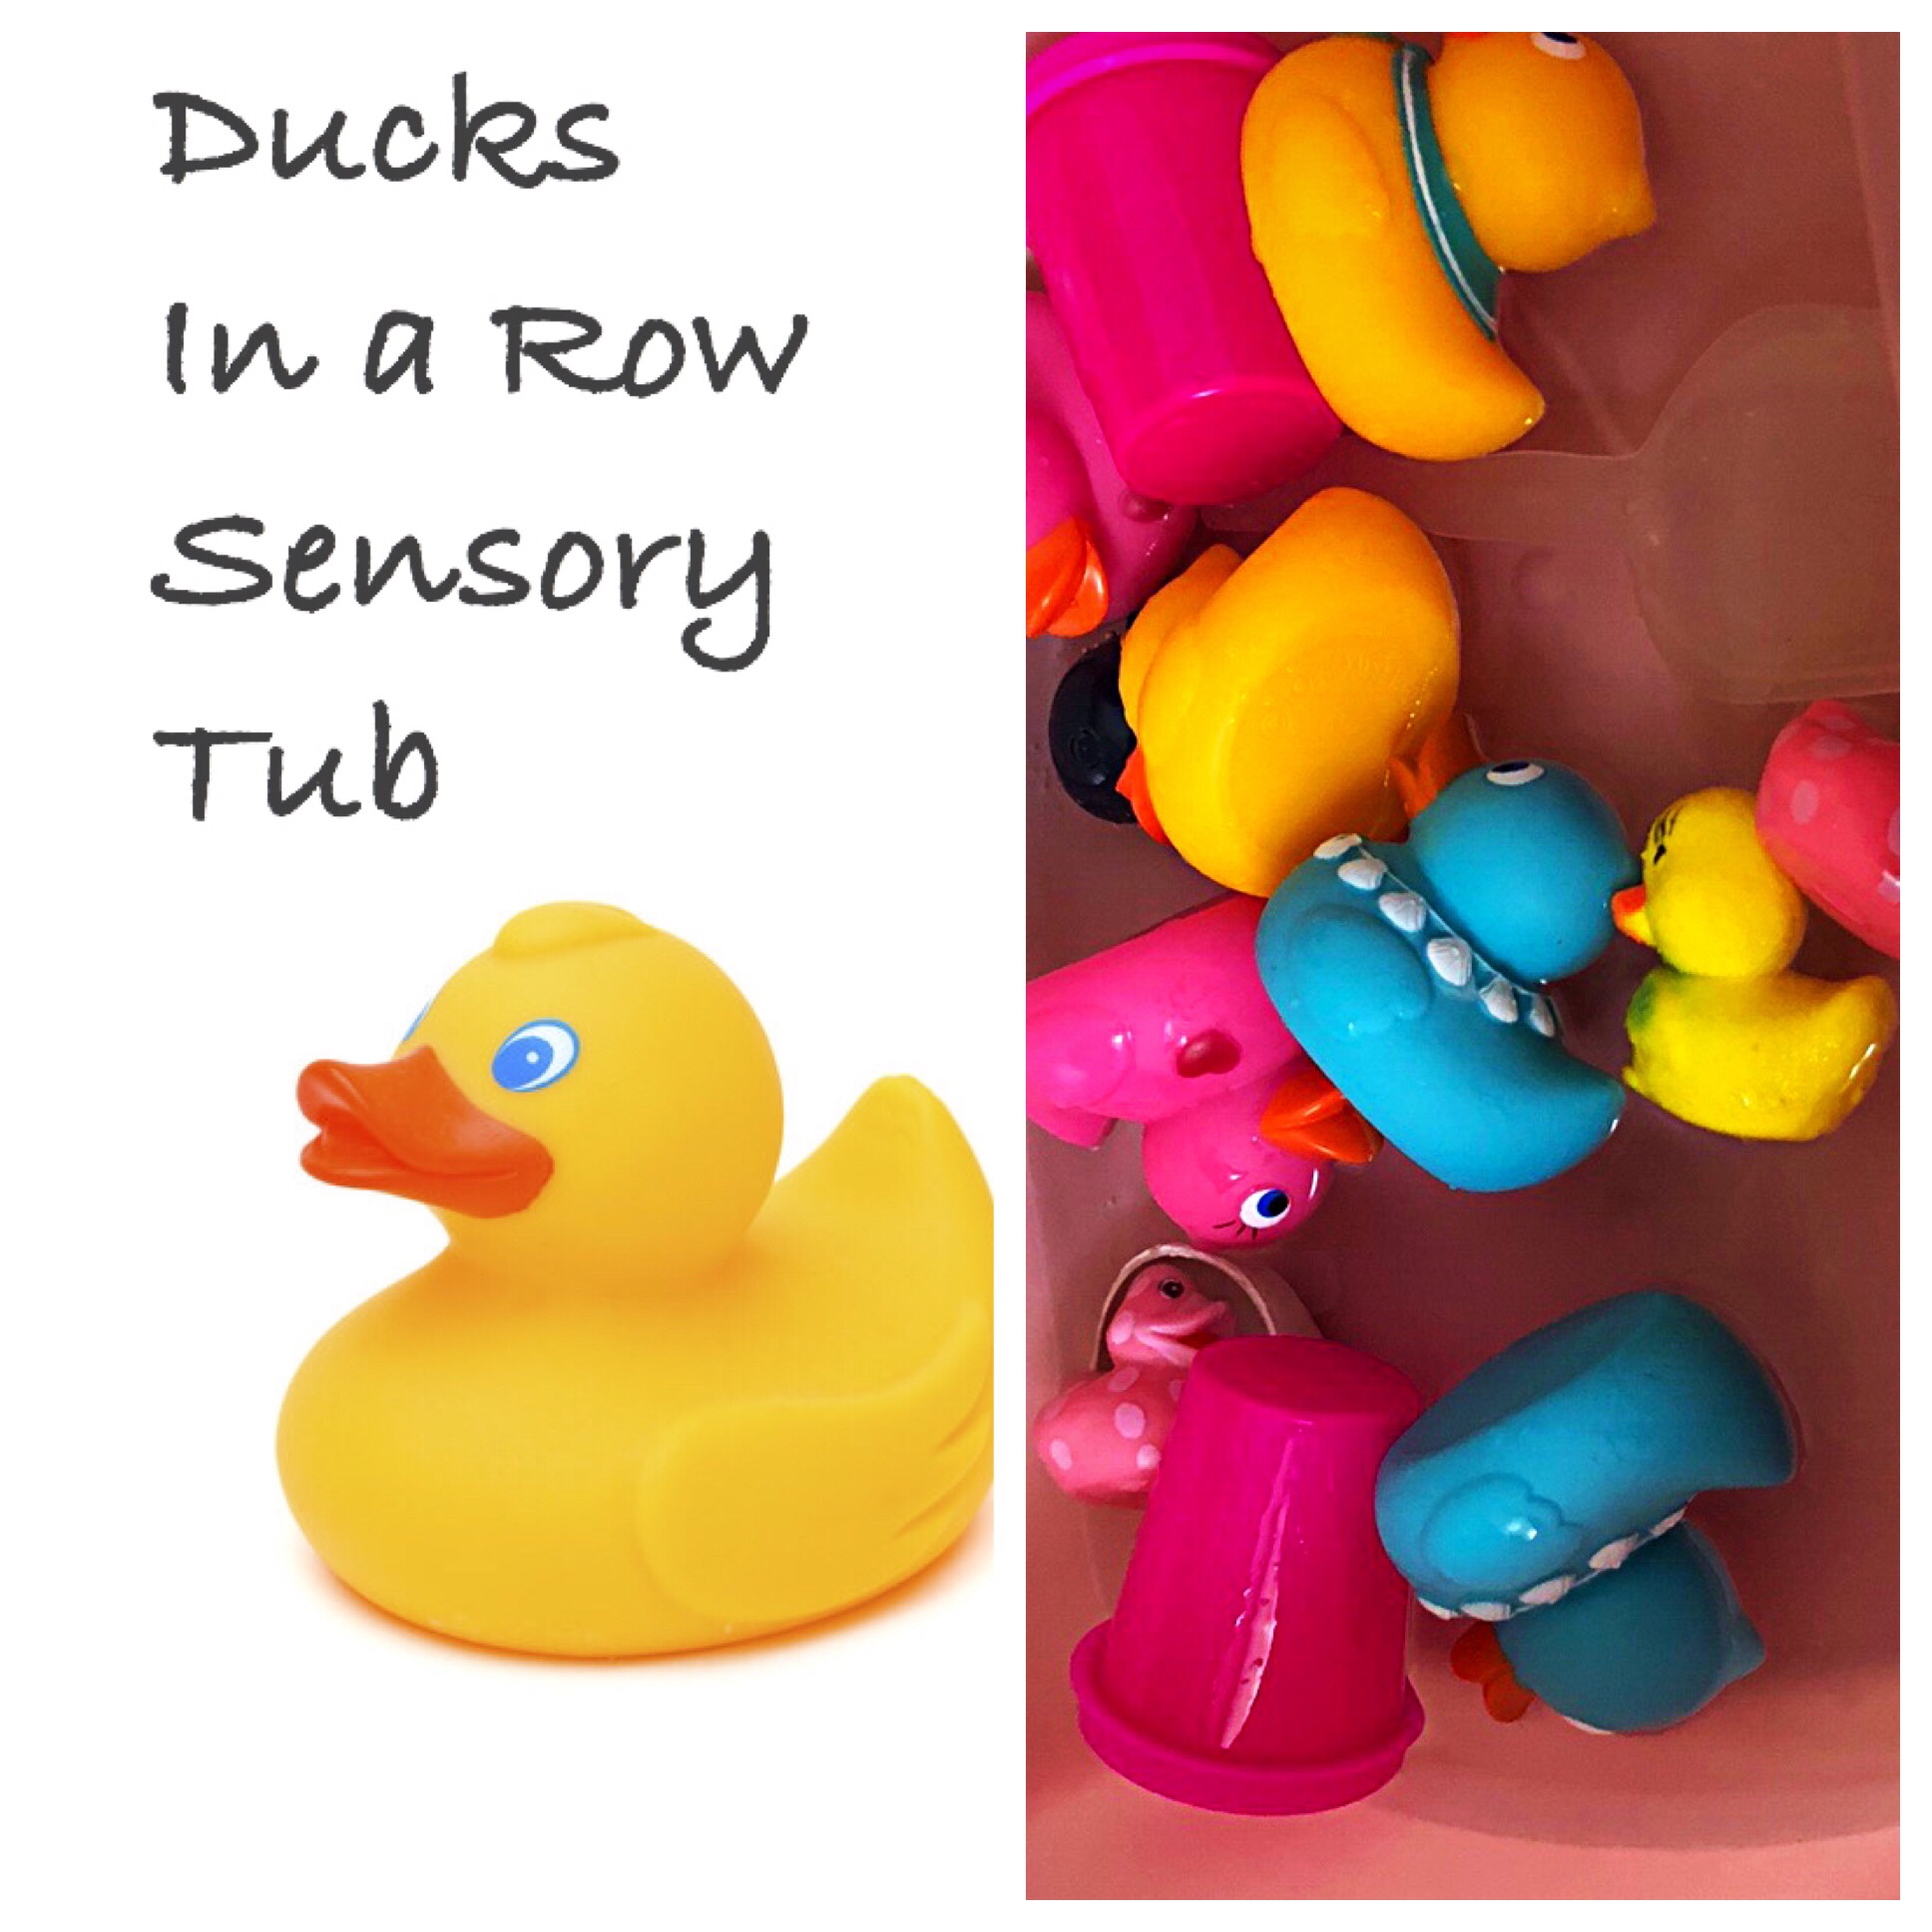 Ducks in a Row Sensory Tub pin